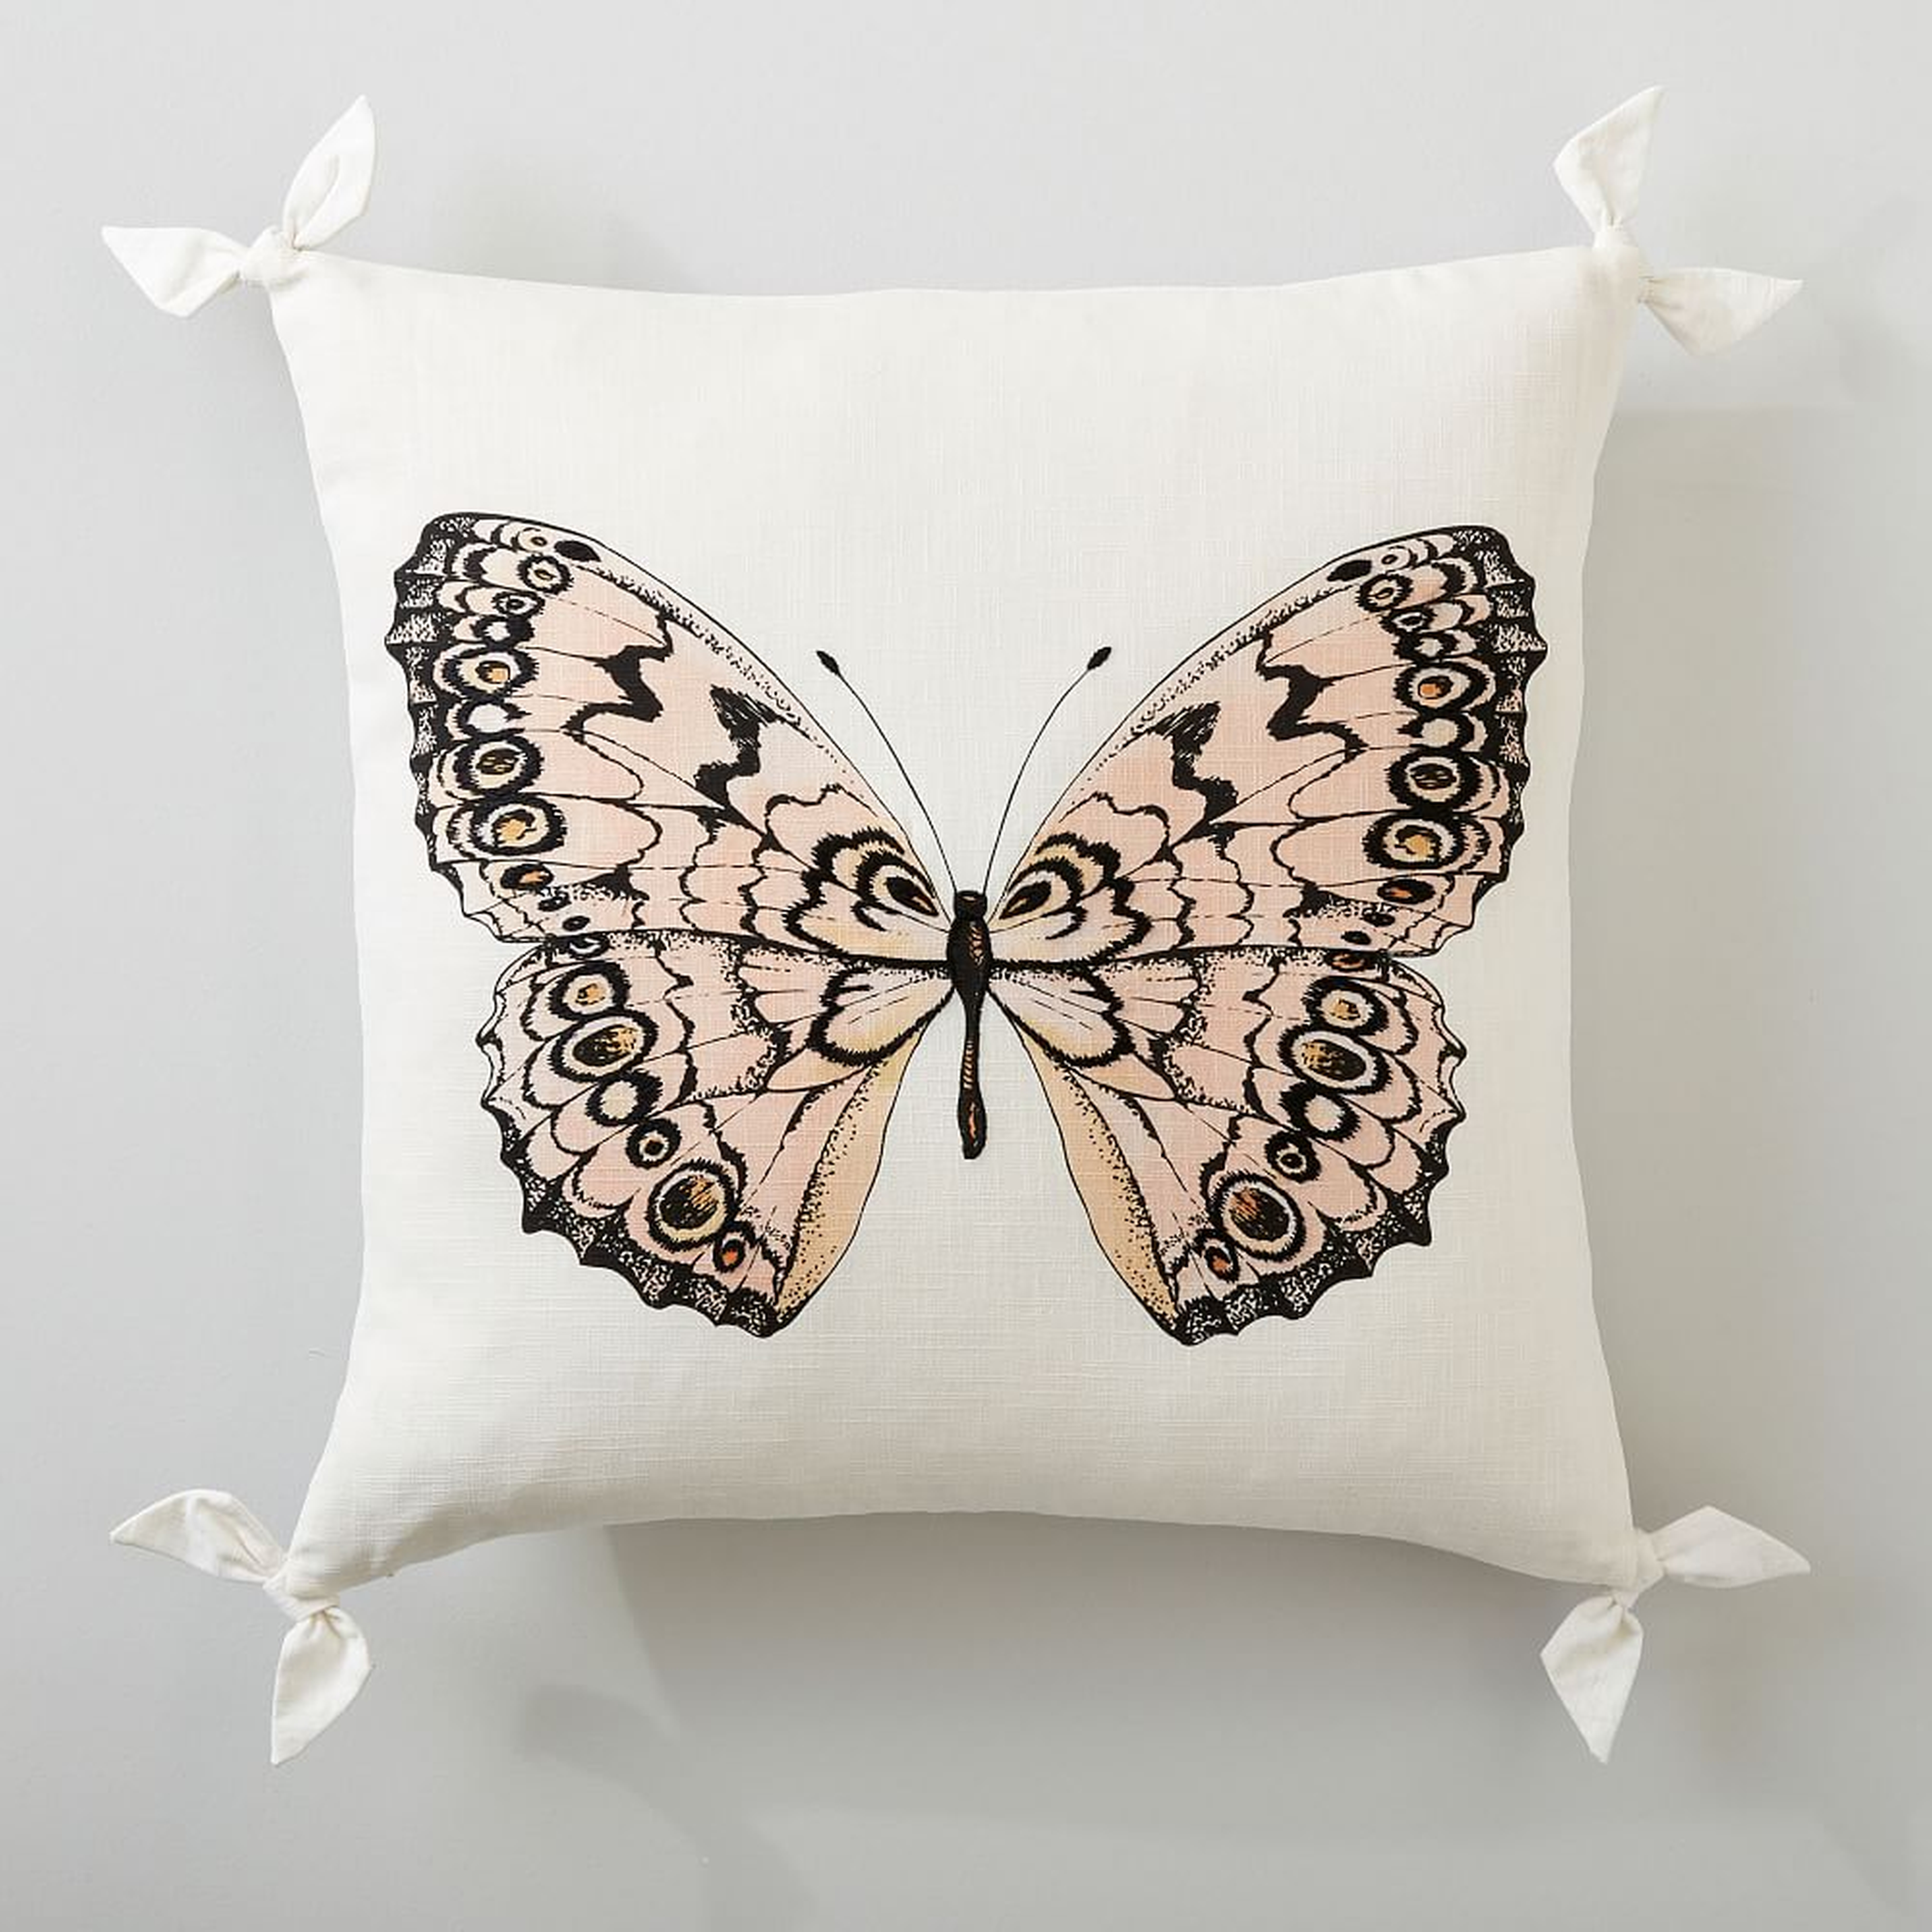 Emily & Meritt Antique Butterfly Pillow, 18x18, Ivory Multi - Pottery Barn Teen